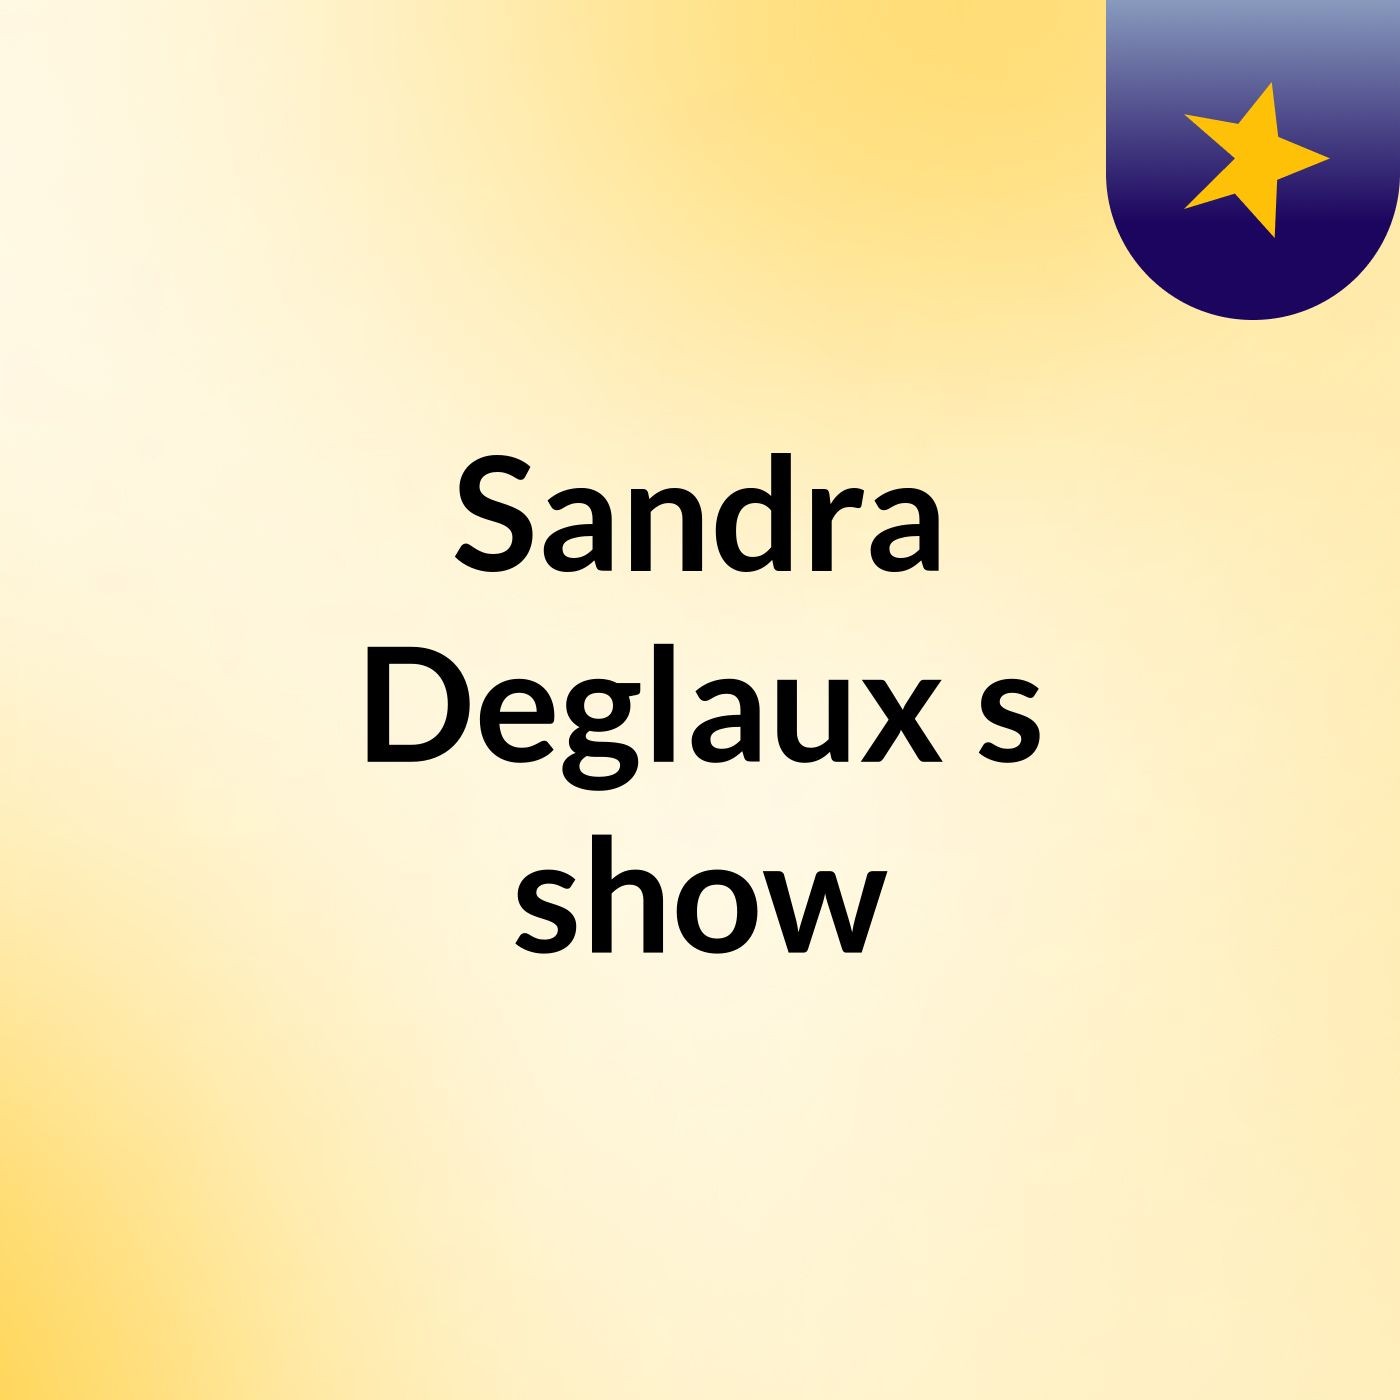 Sandra Deglaux's show